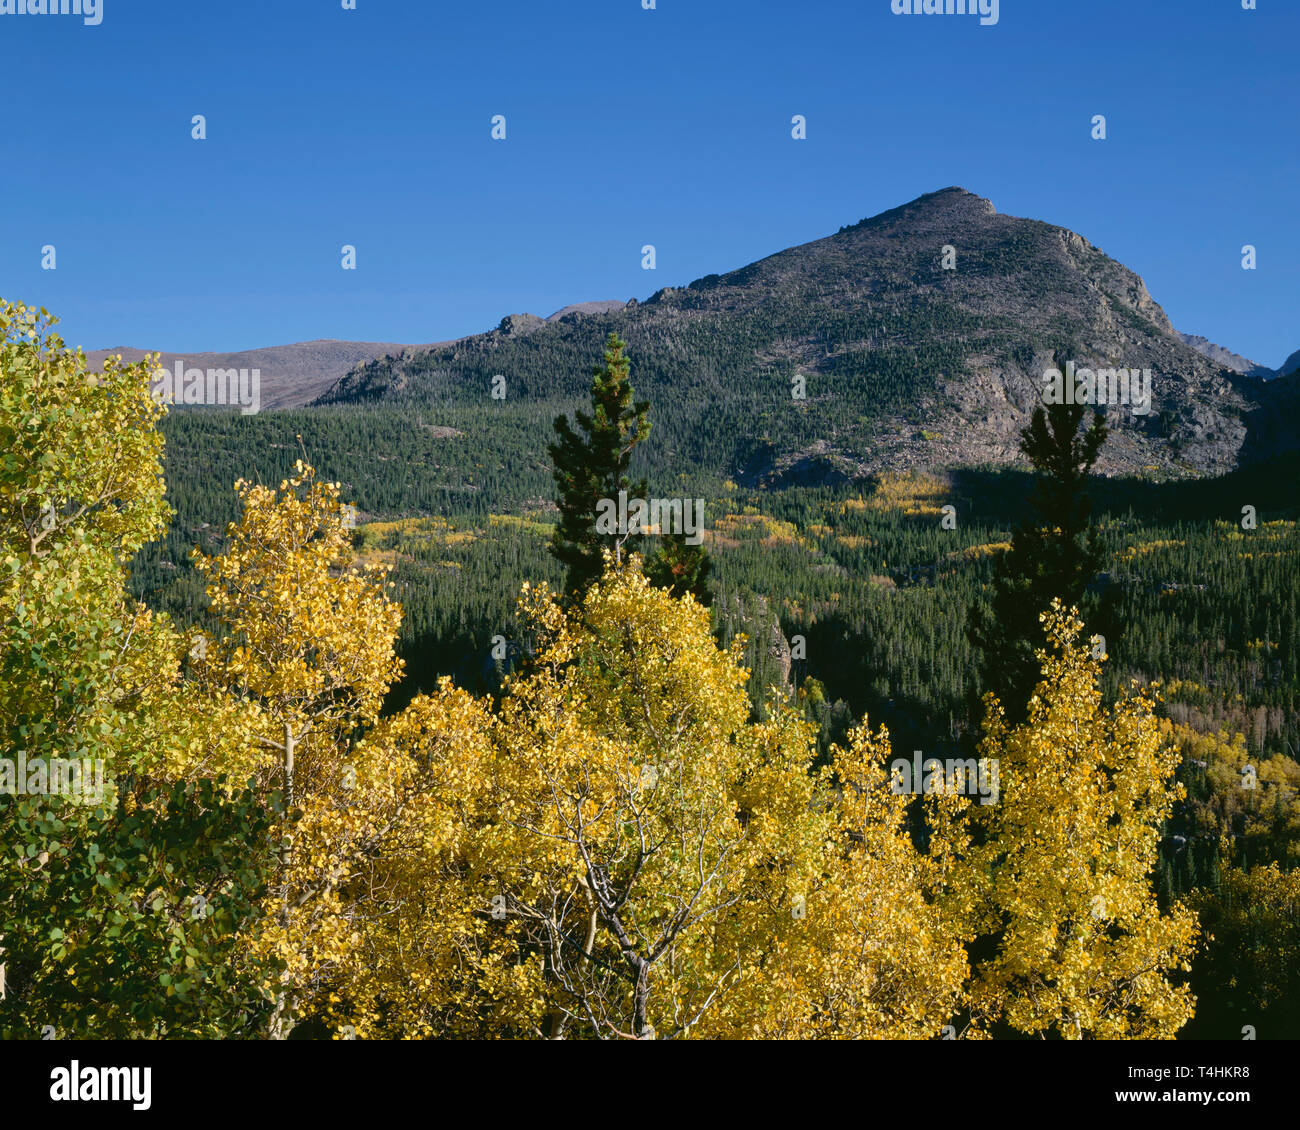 USA, Colorado, Rocky Mountain National Park, Fall-colored quaking aspen mix with conifers beneath Half Mountain. Stock Photo